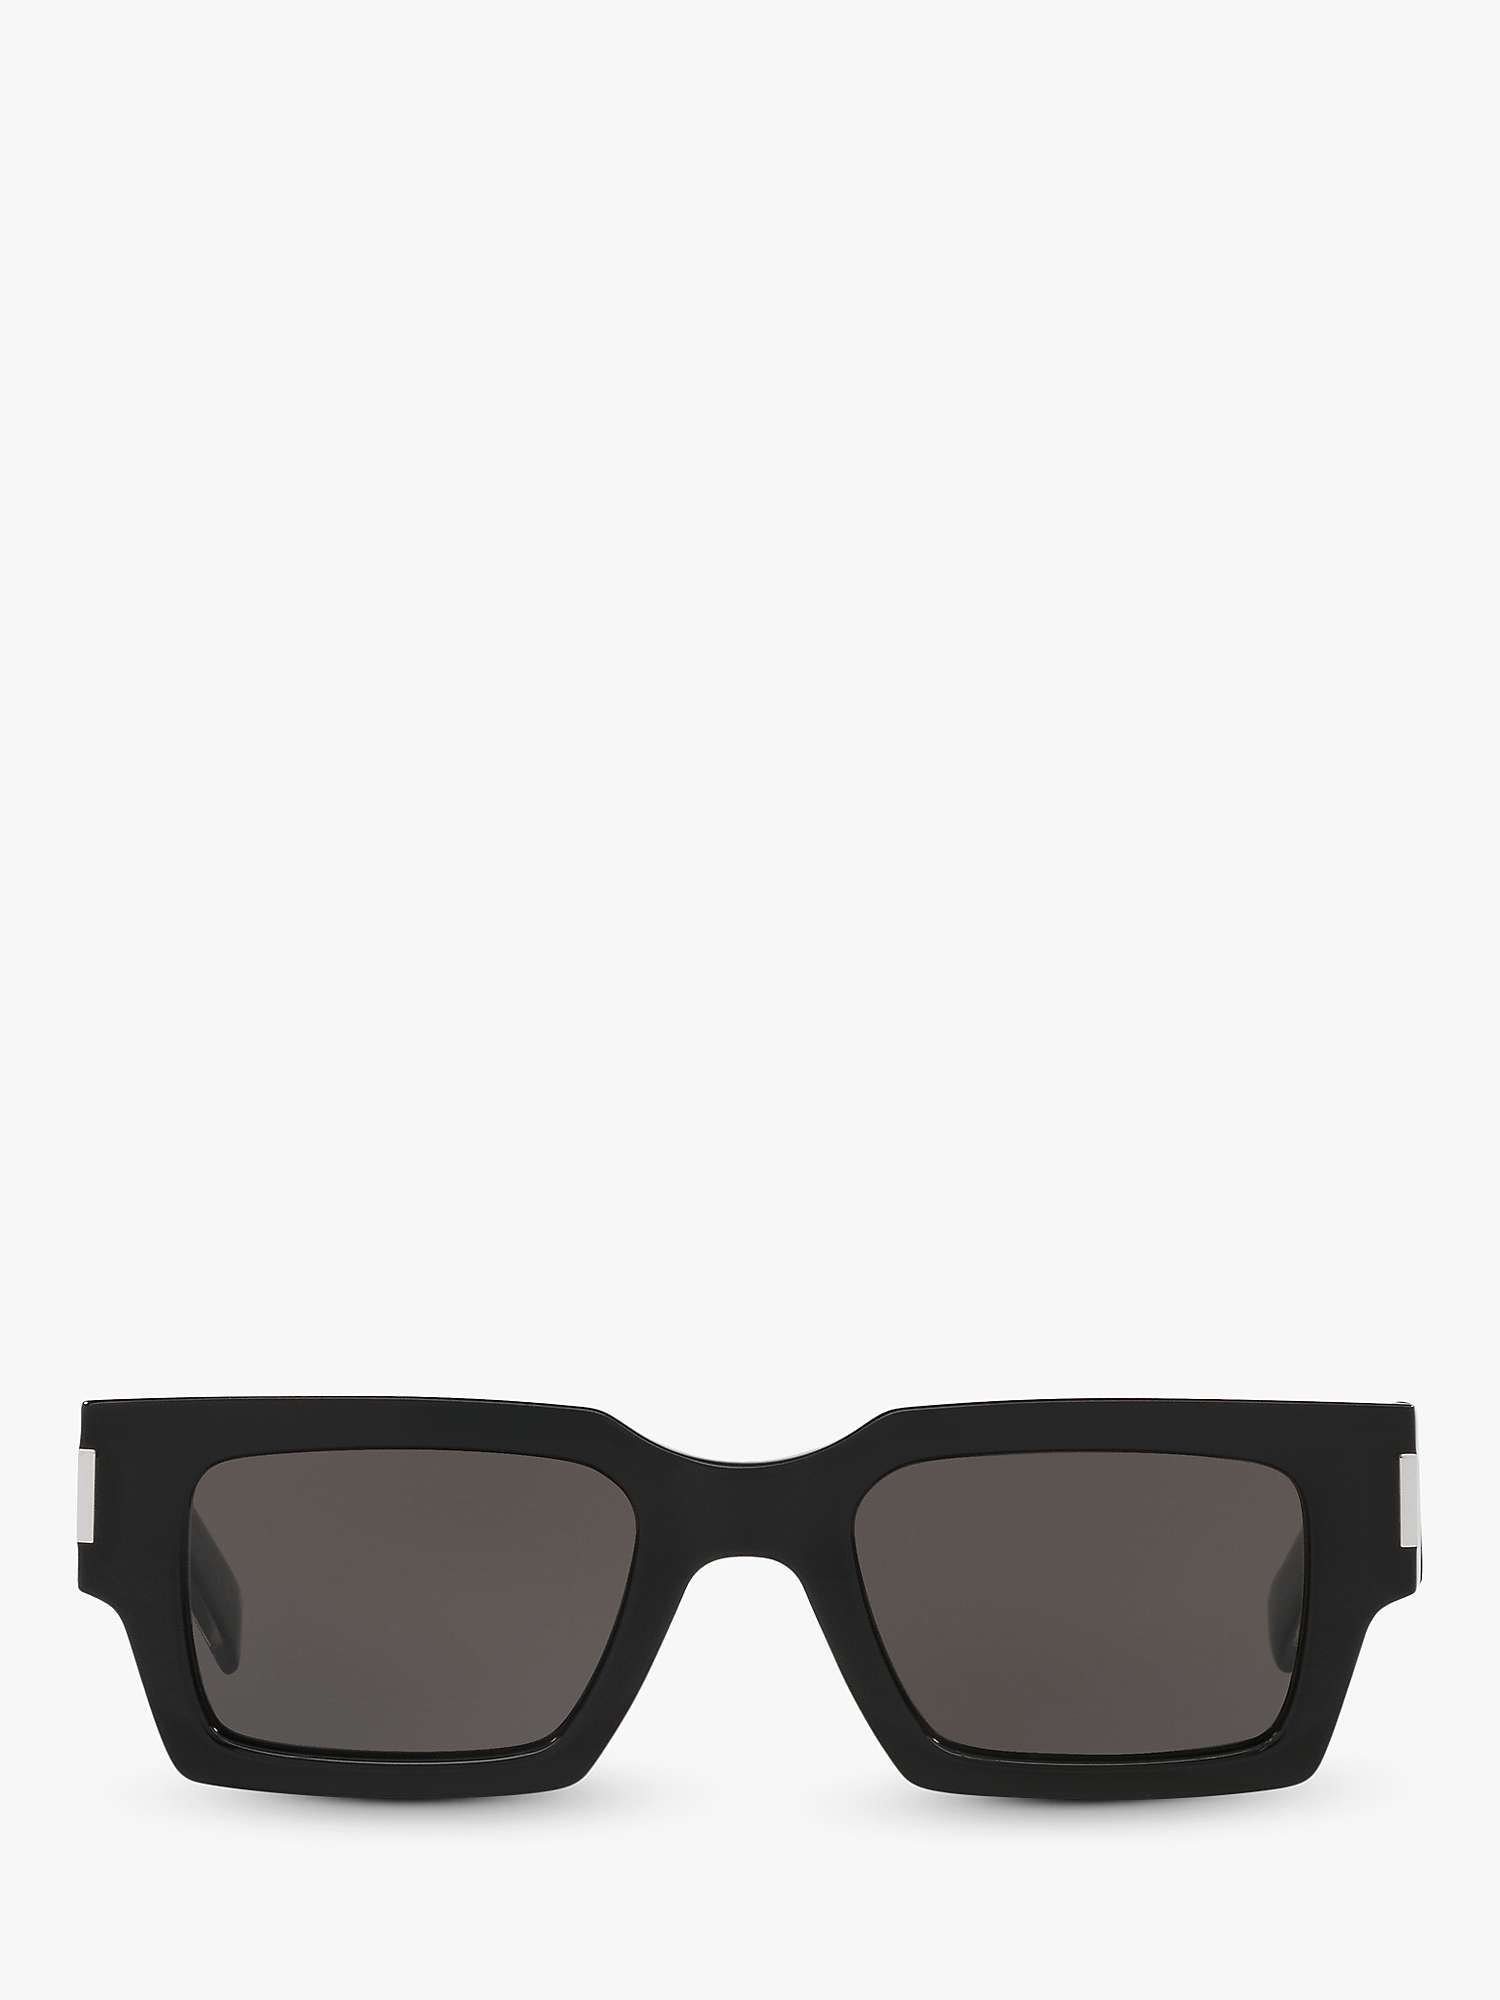 Buy Yves Saint Laurent YS000468 Unisex Square Sunglasses, Black/Grey Online at johnlewis.com